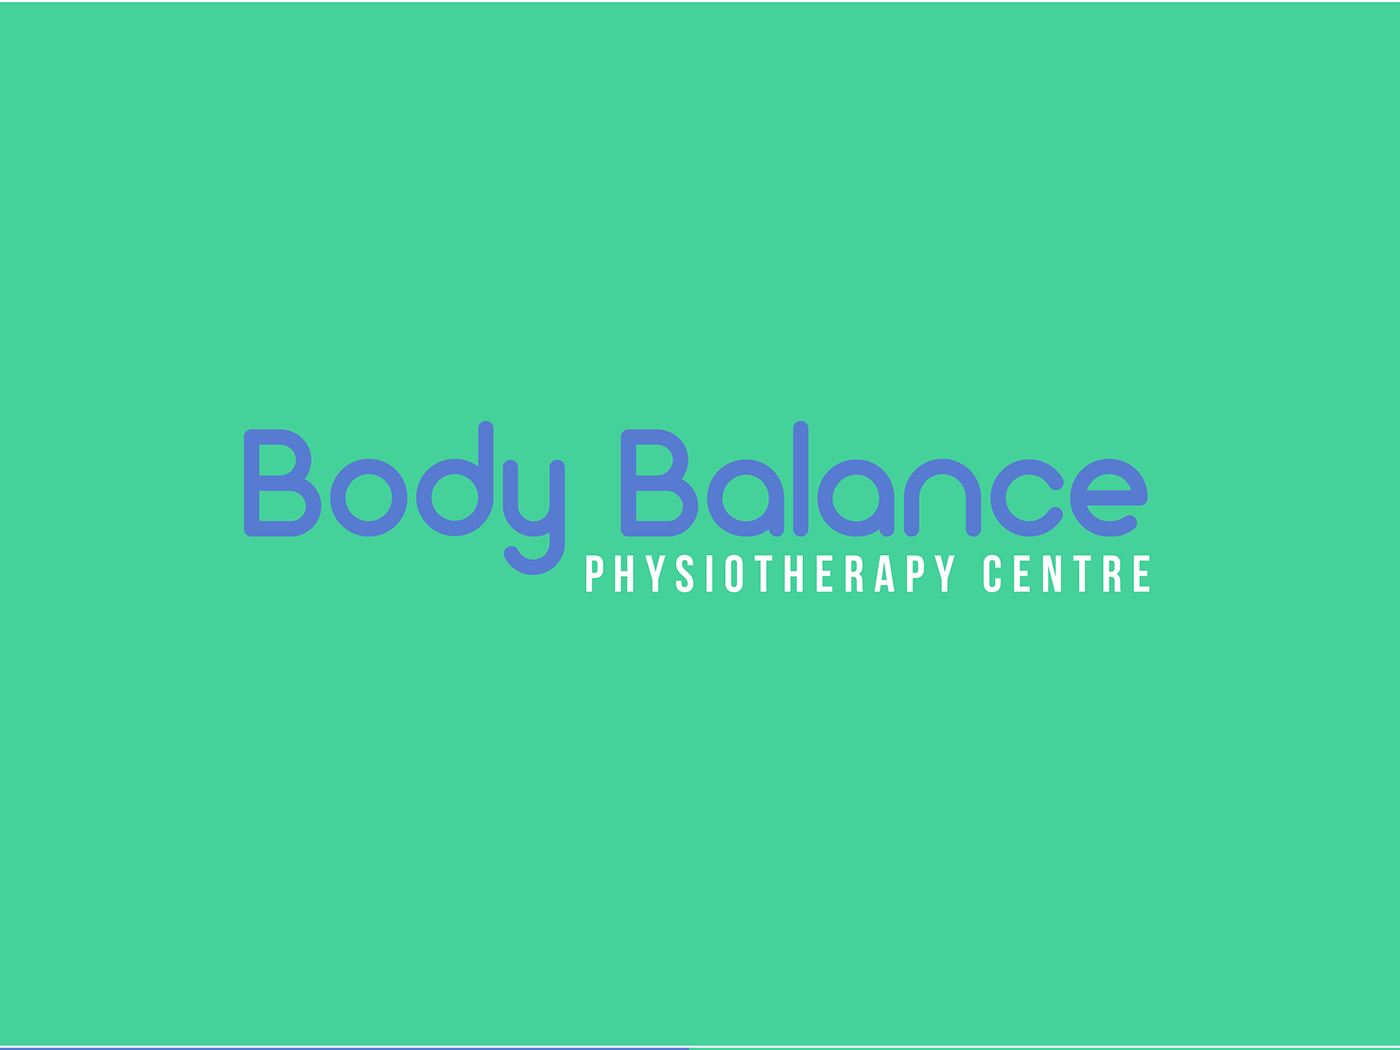 Logo Design branding  physiotherapy clinic logo logo identity brand identity logo physiotherapy logo inspiration body balance